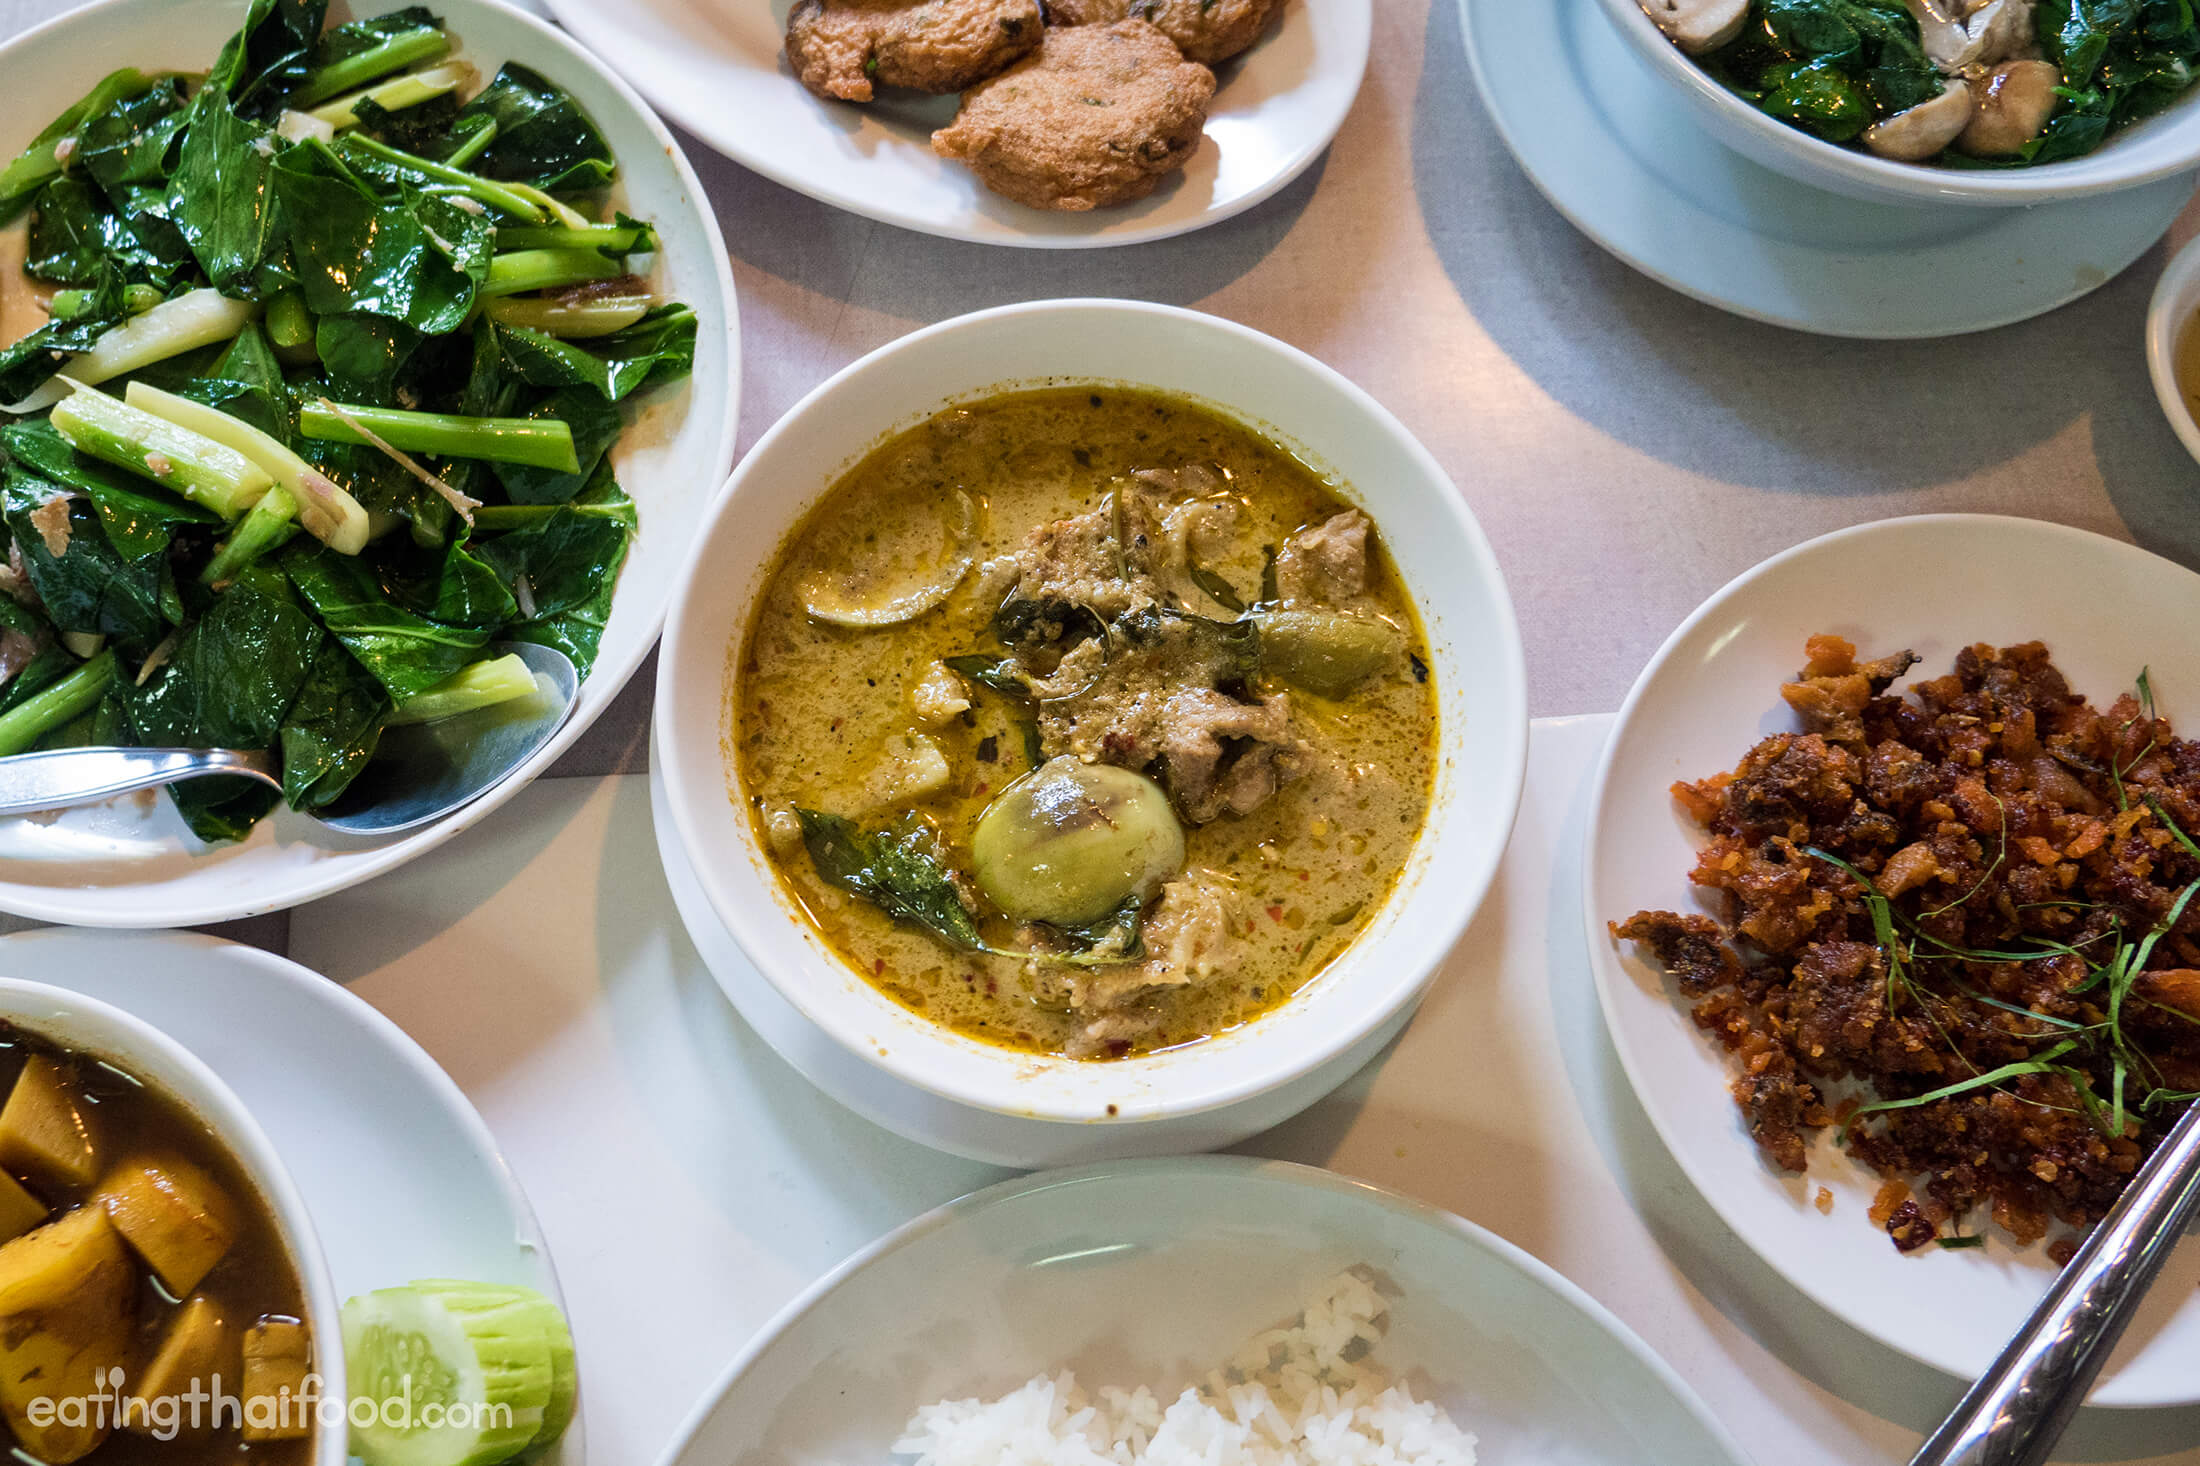 Best Thai Green Curry in Bangkok at Sanguan Sri (ร้านสงวนศรี)